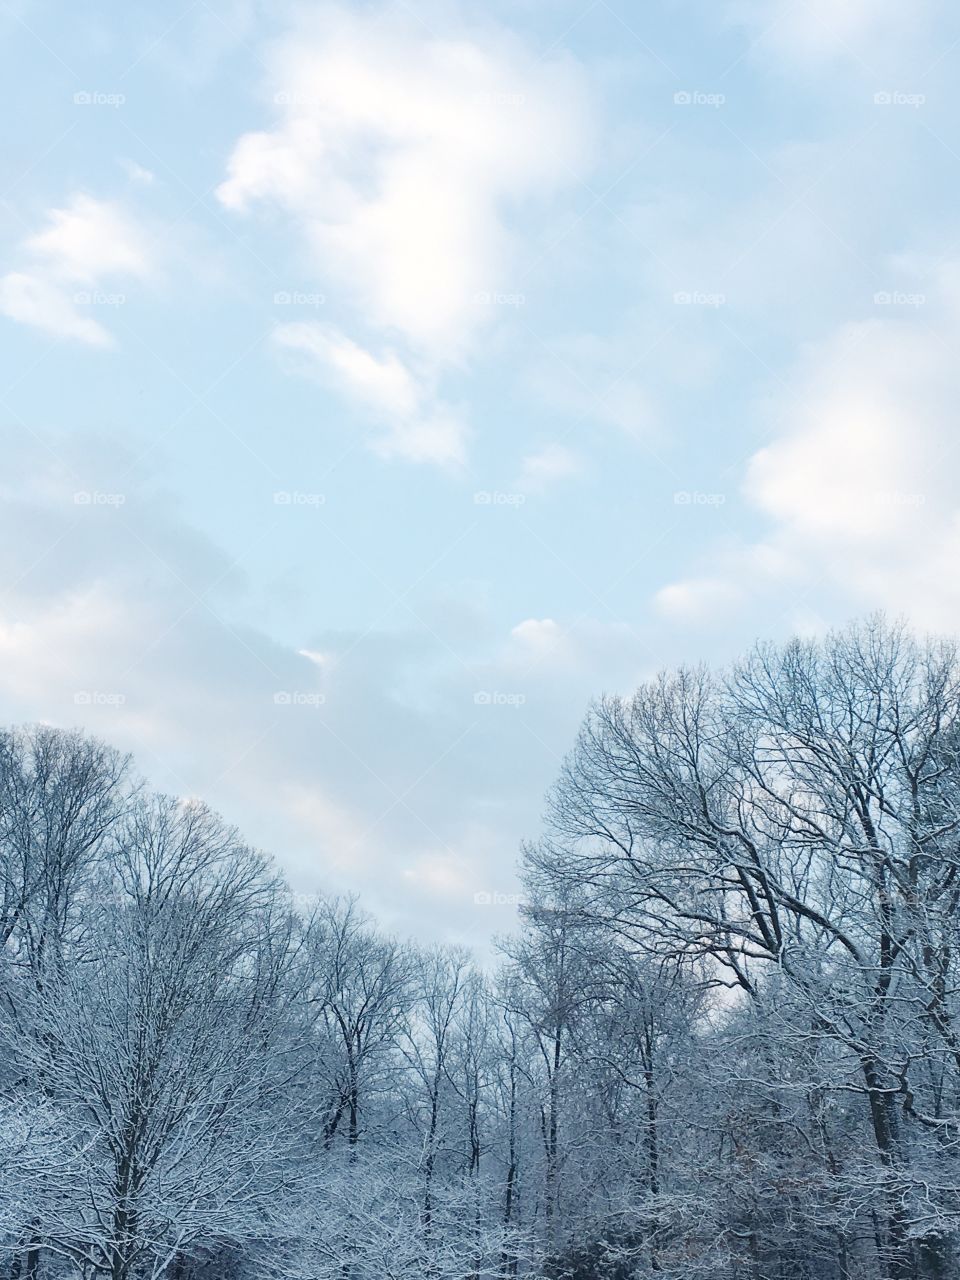 Winter, Snow, Frost, Cold, Landscape